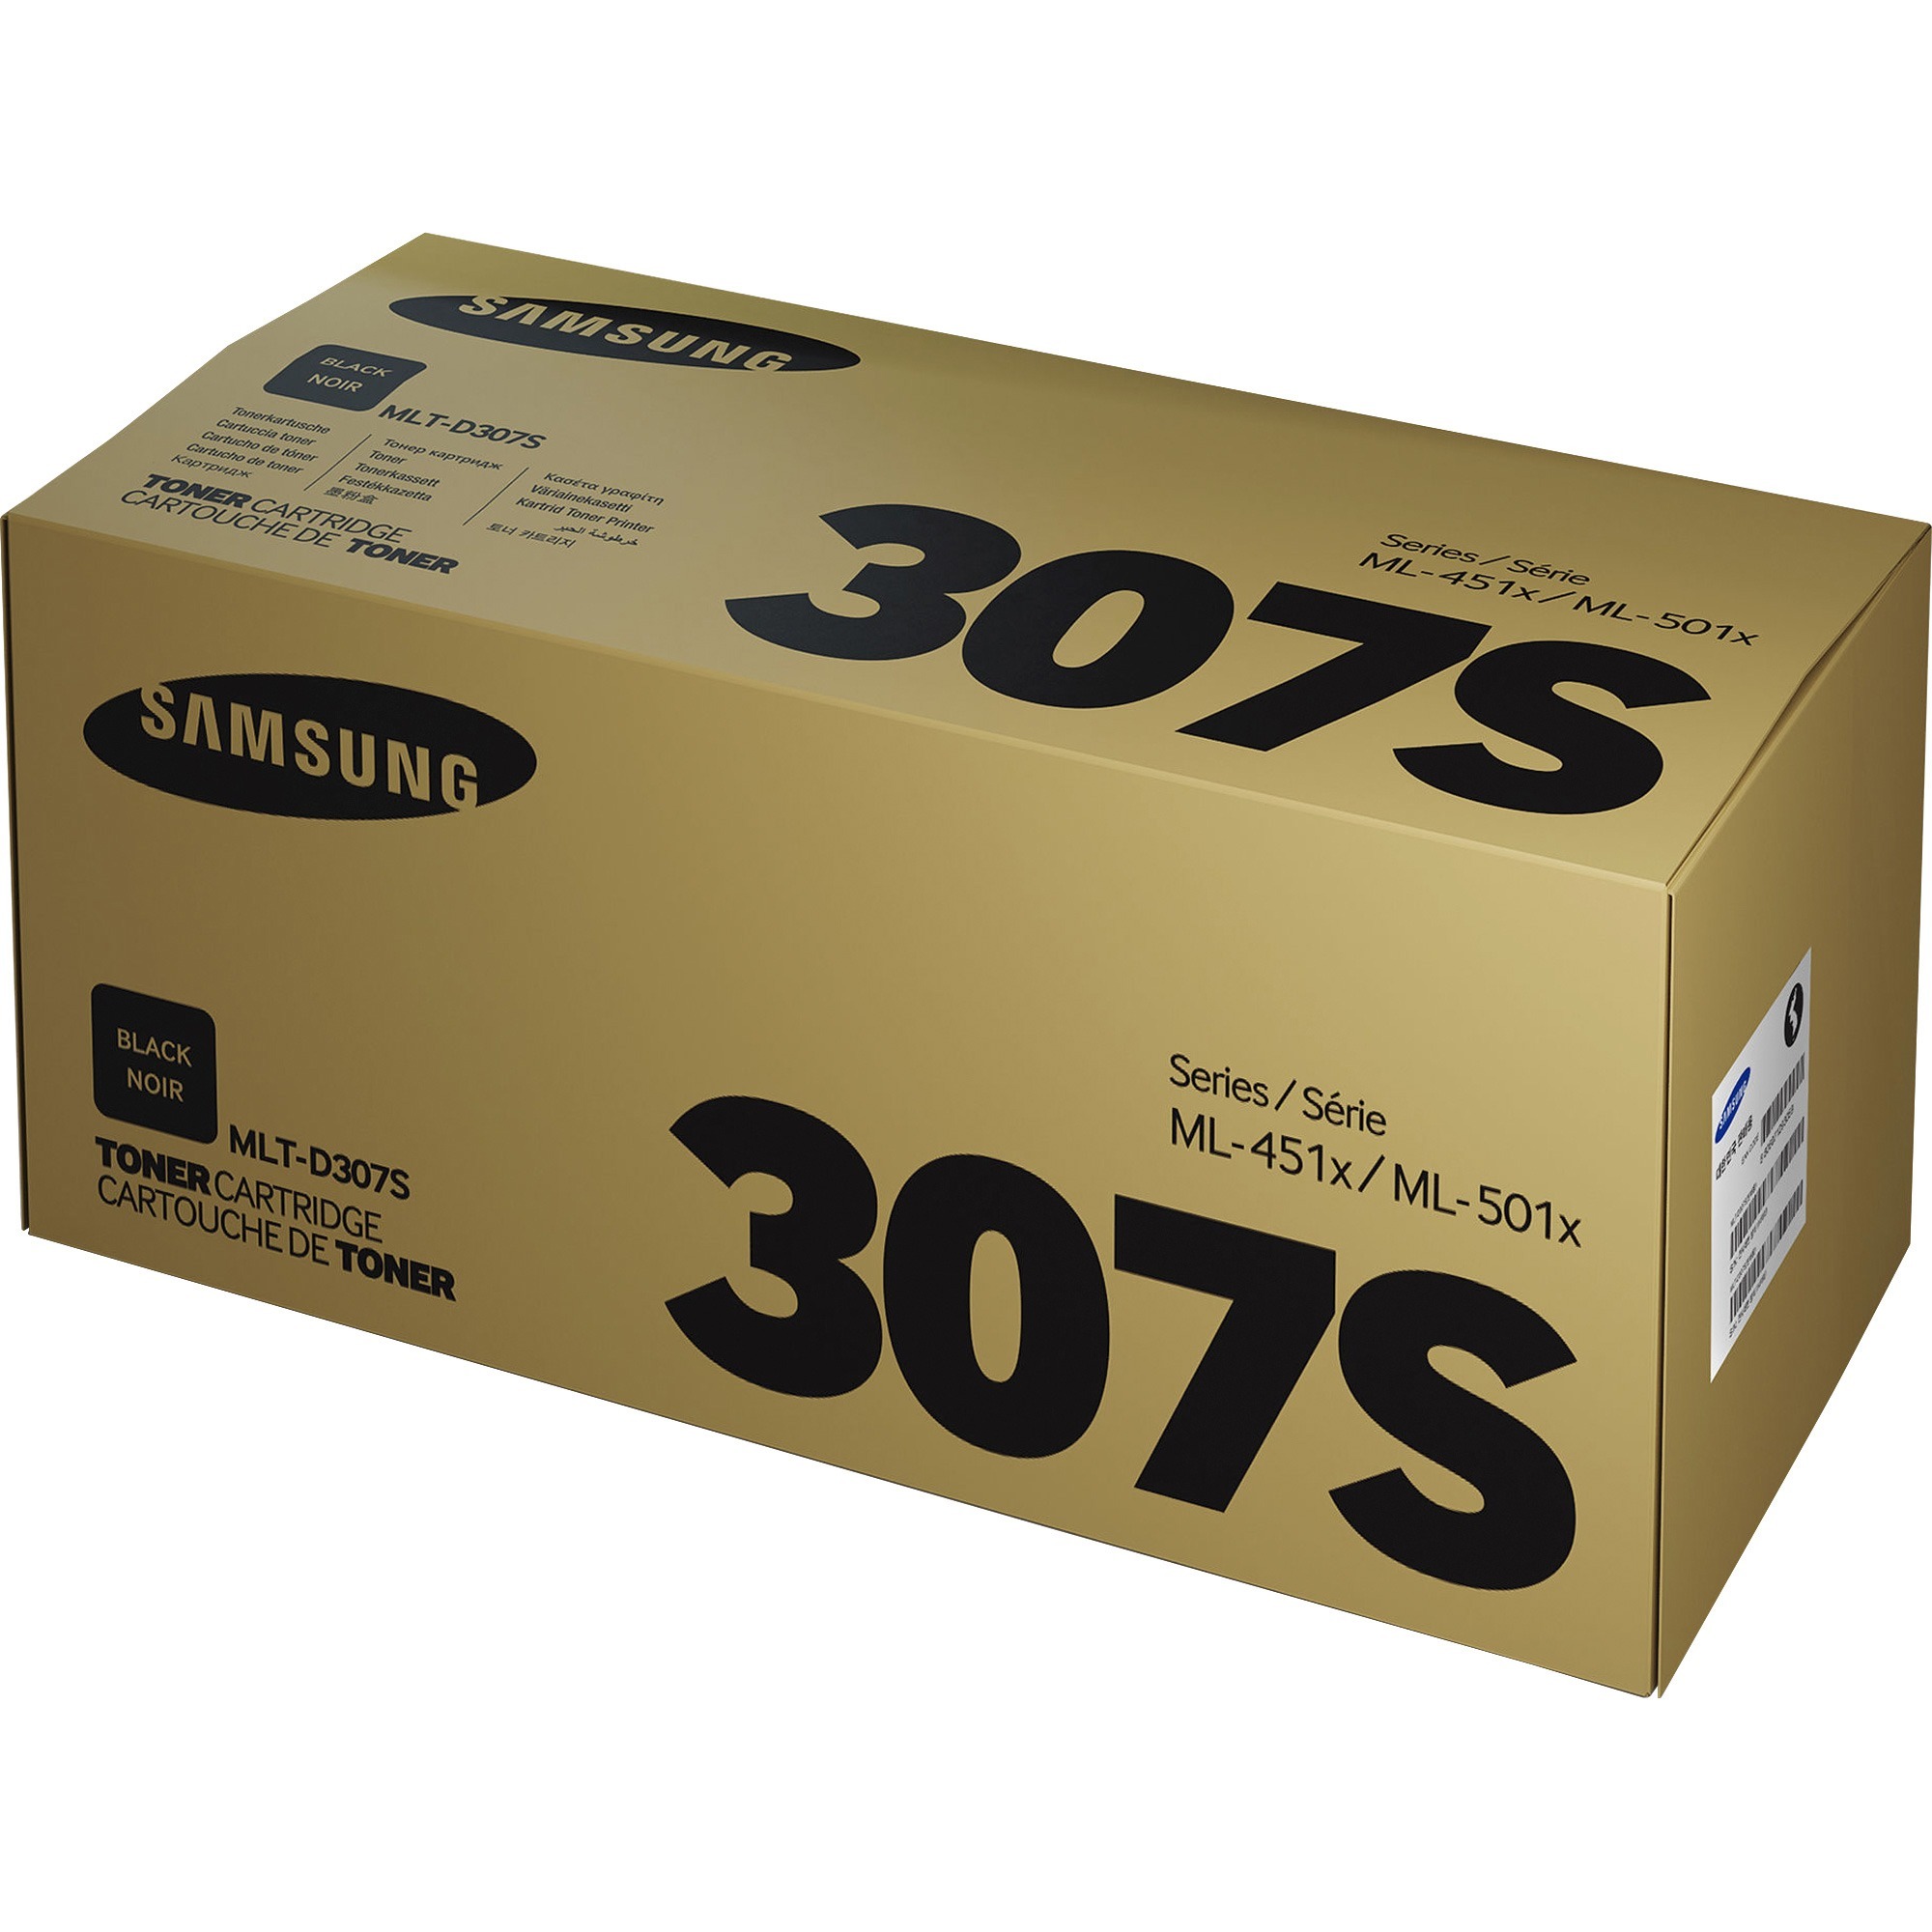 Samsung, HEWSV077A, MLT-D307S (SV077A) Black Toner Cartridge, 1 Each - image 1 of 2